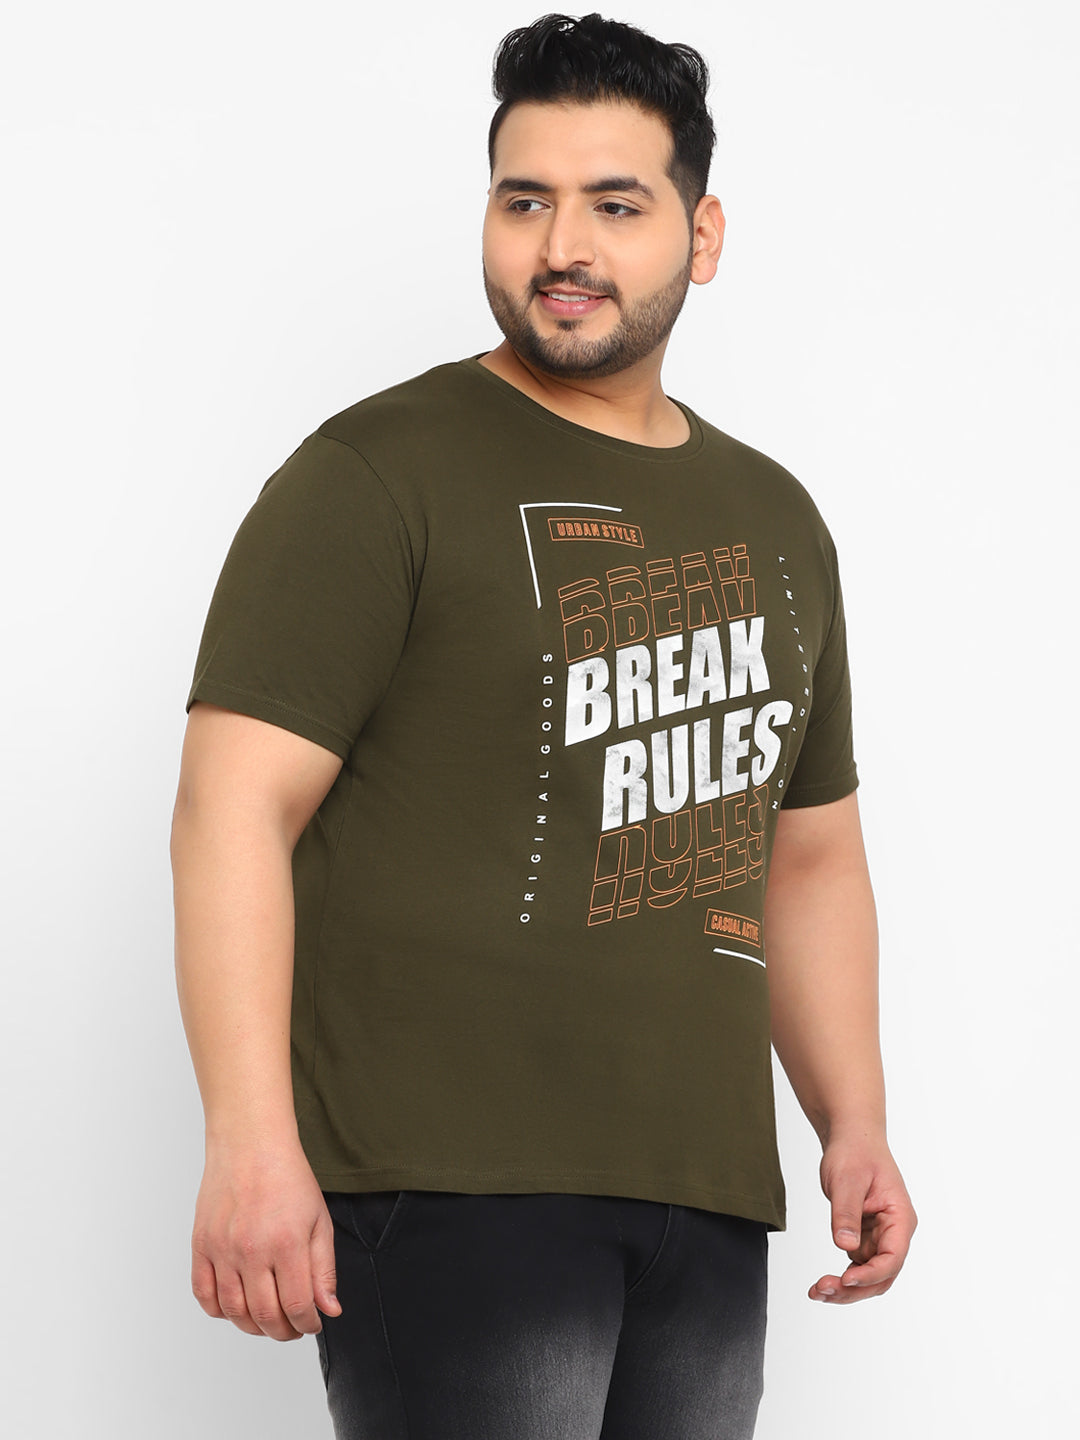 Urbano Plus Men's Green Graphic Printed Half Sleeve Regular Fit Cotton T-Shirt